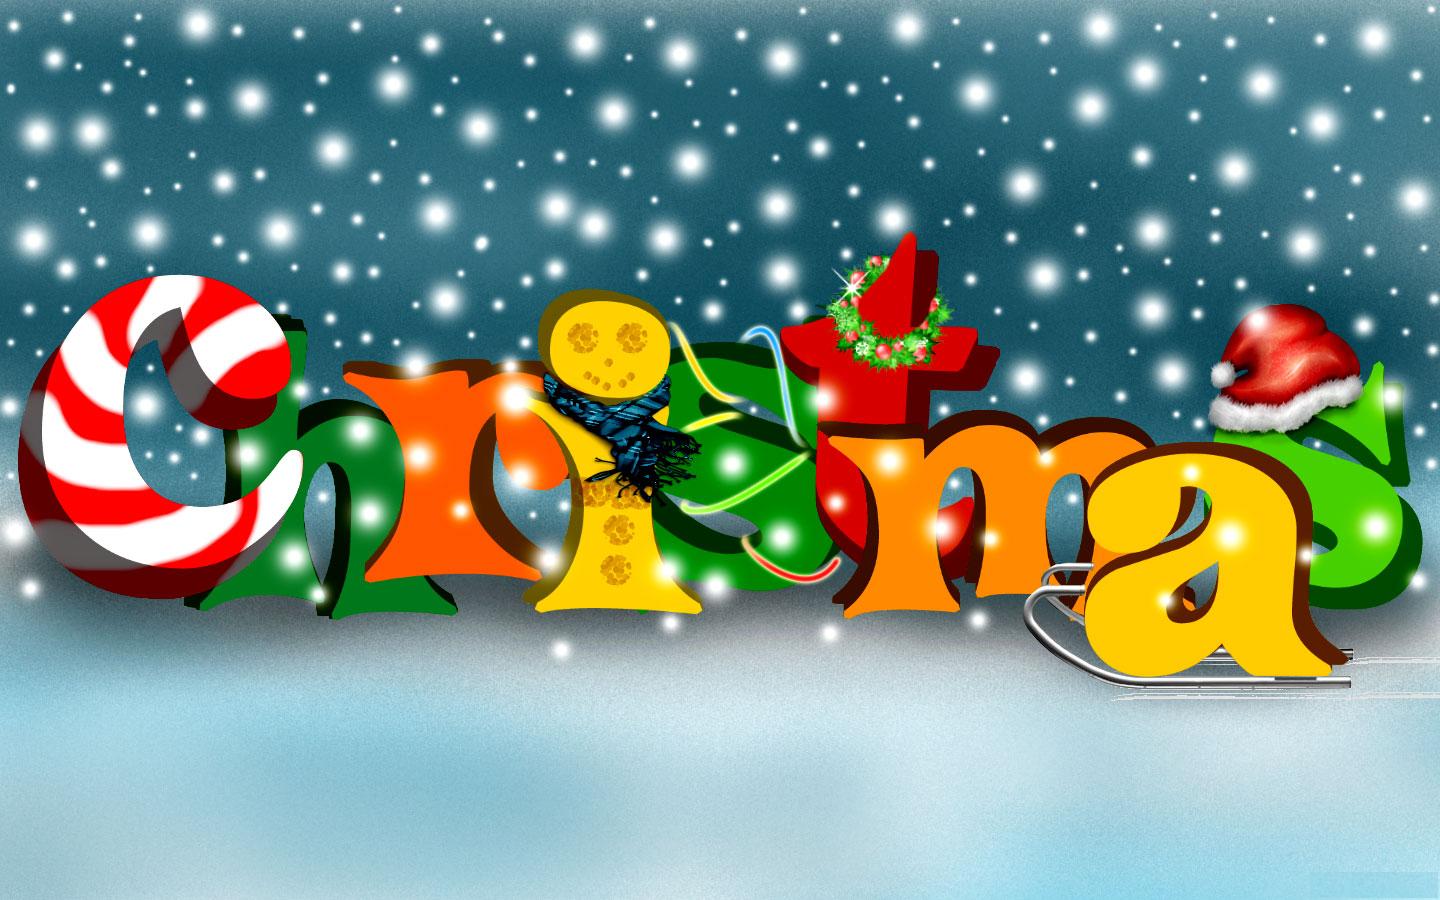 iPad Wallpapers: Free Download Christmas Snowman iPad mini Wallpapers ...